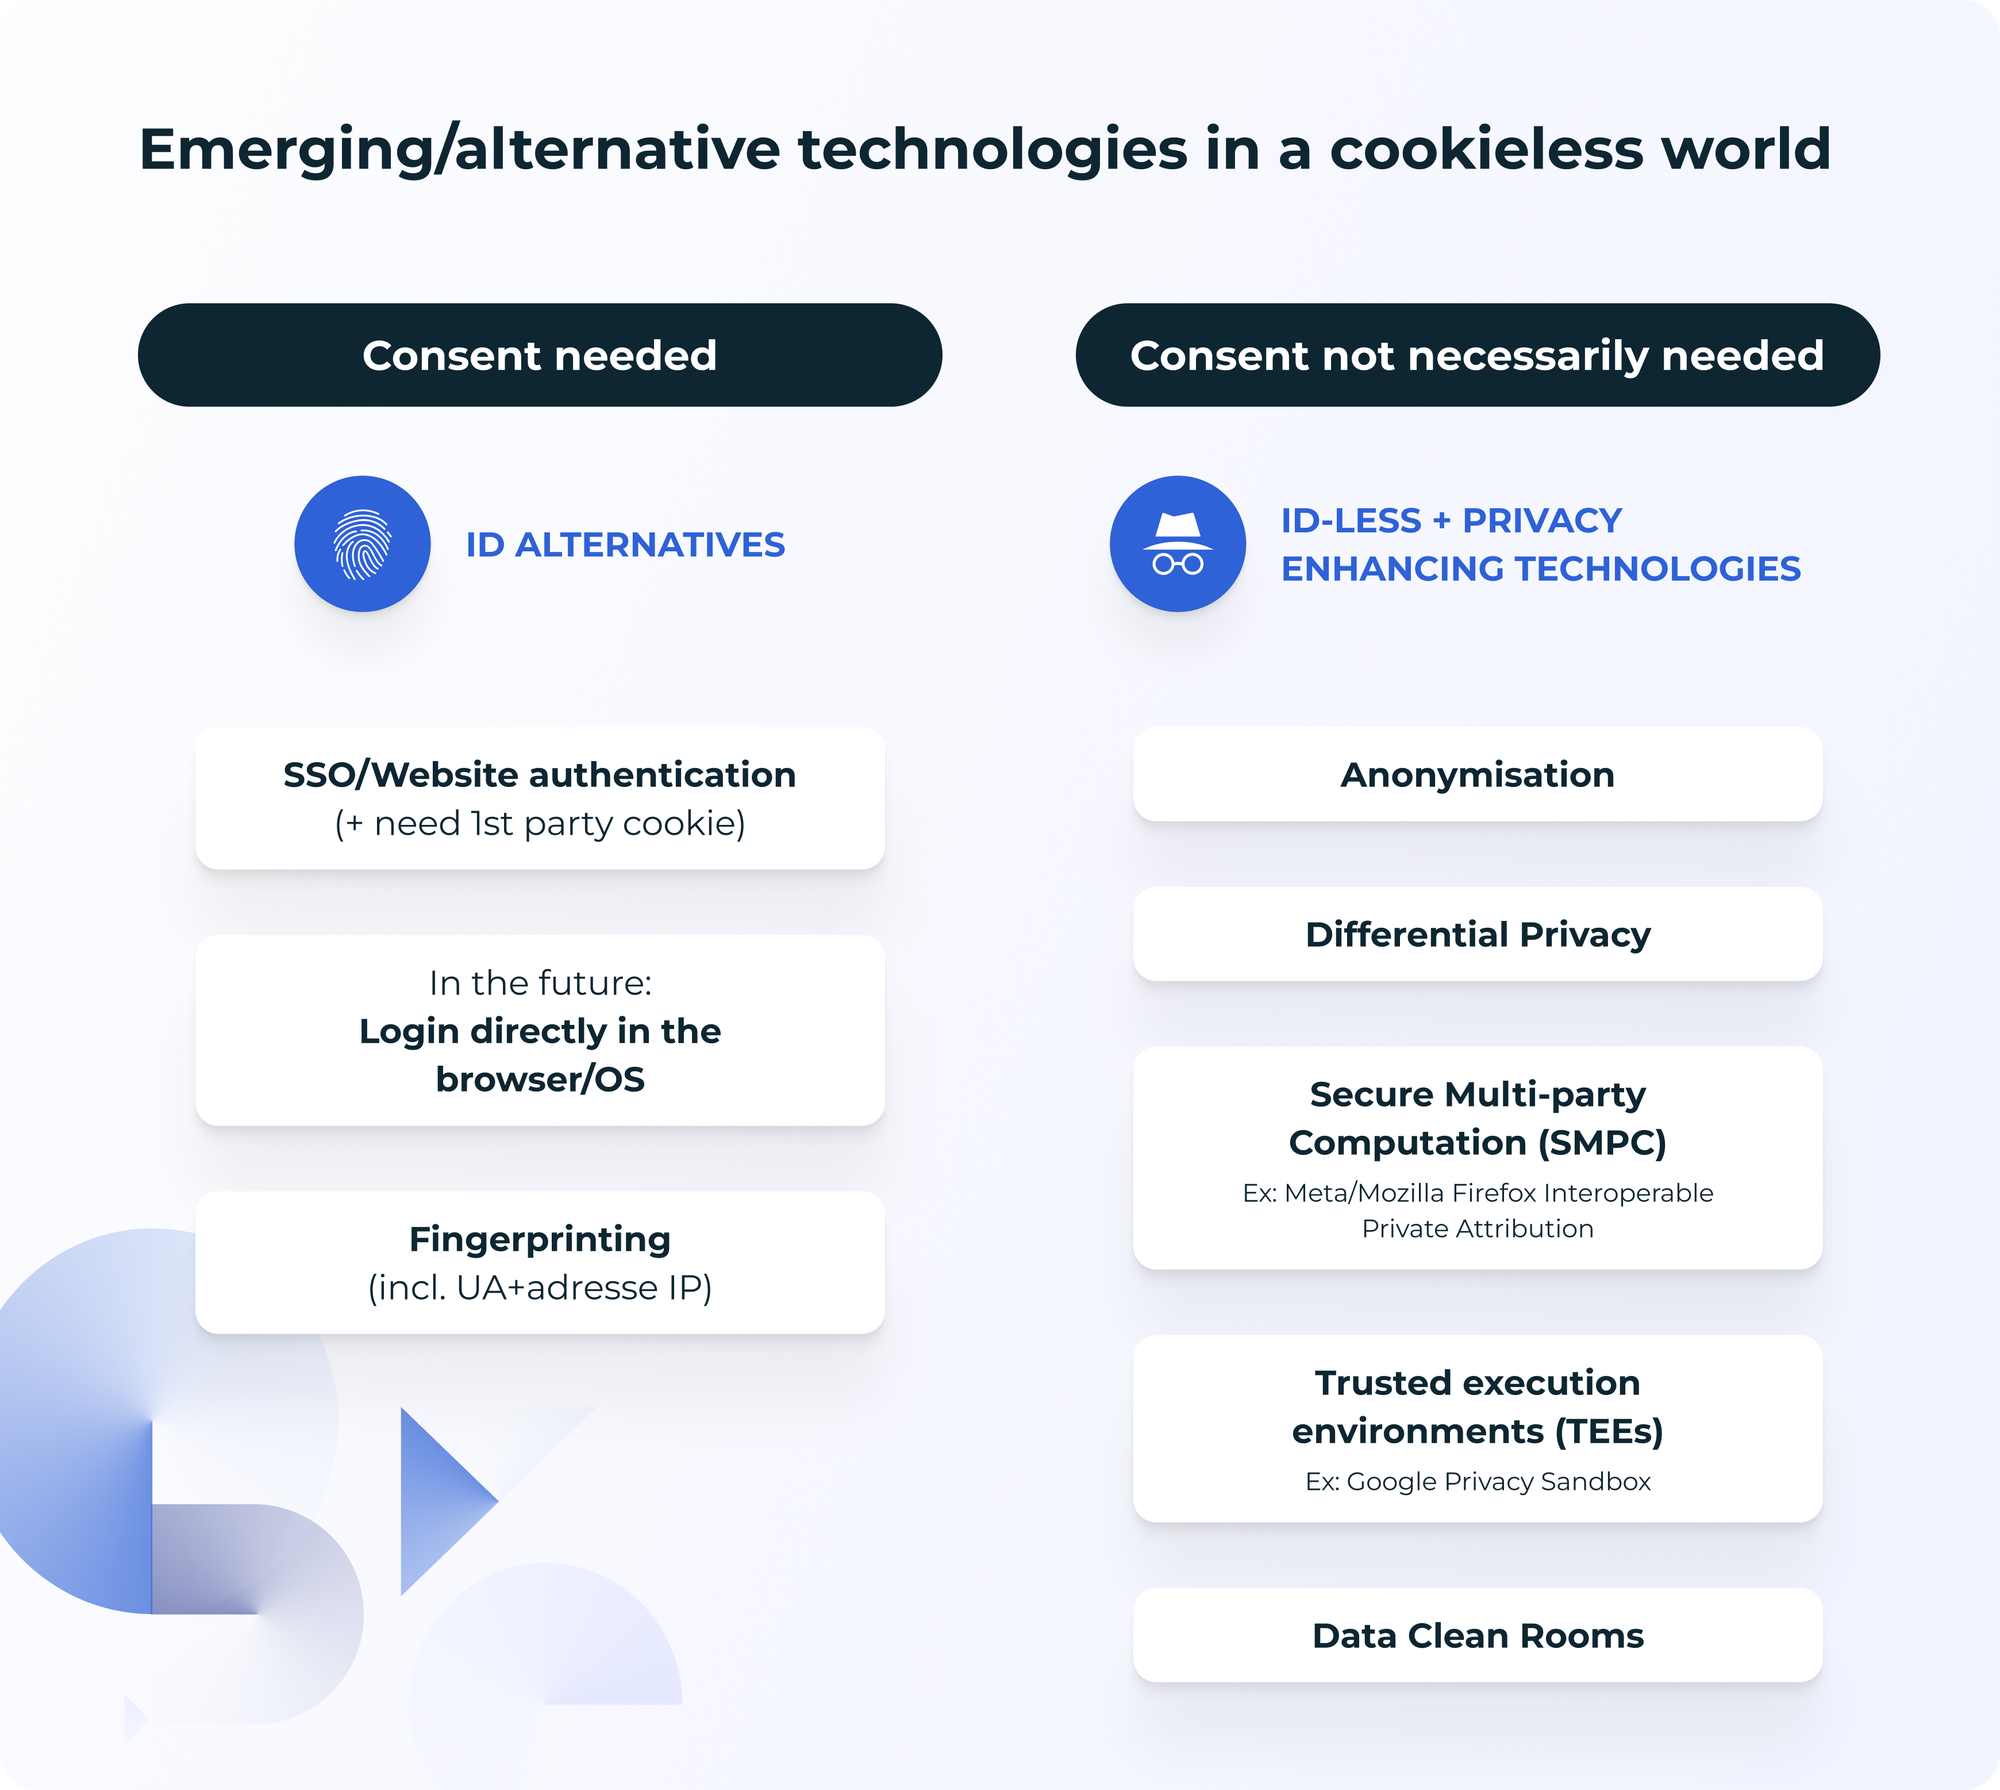 Didomi - emerging technologies in a cookieless world